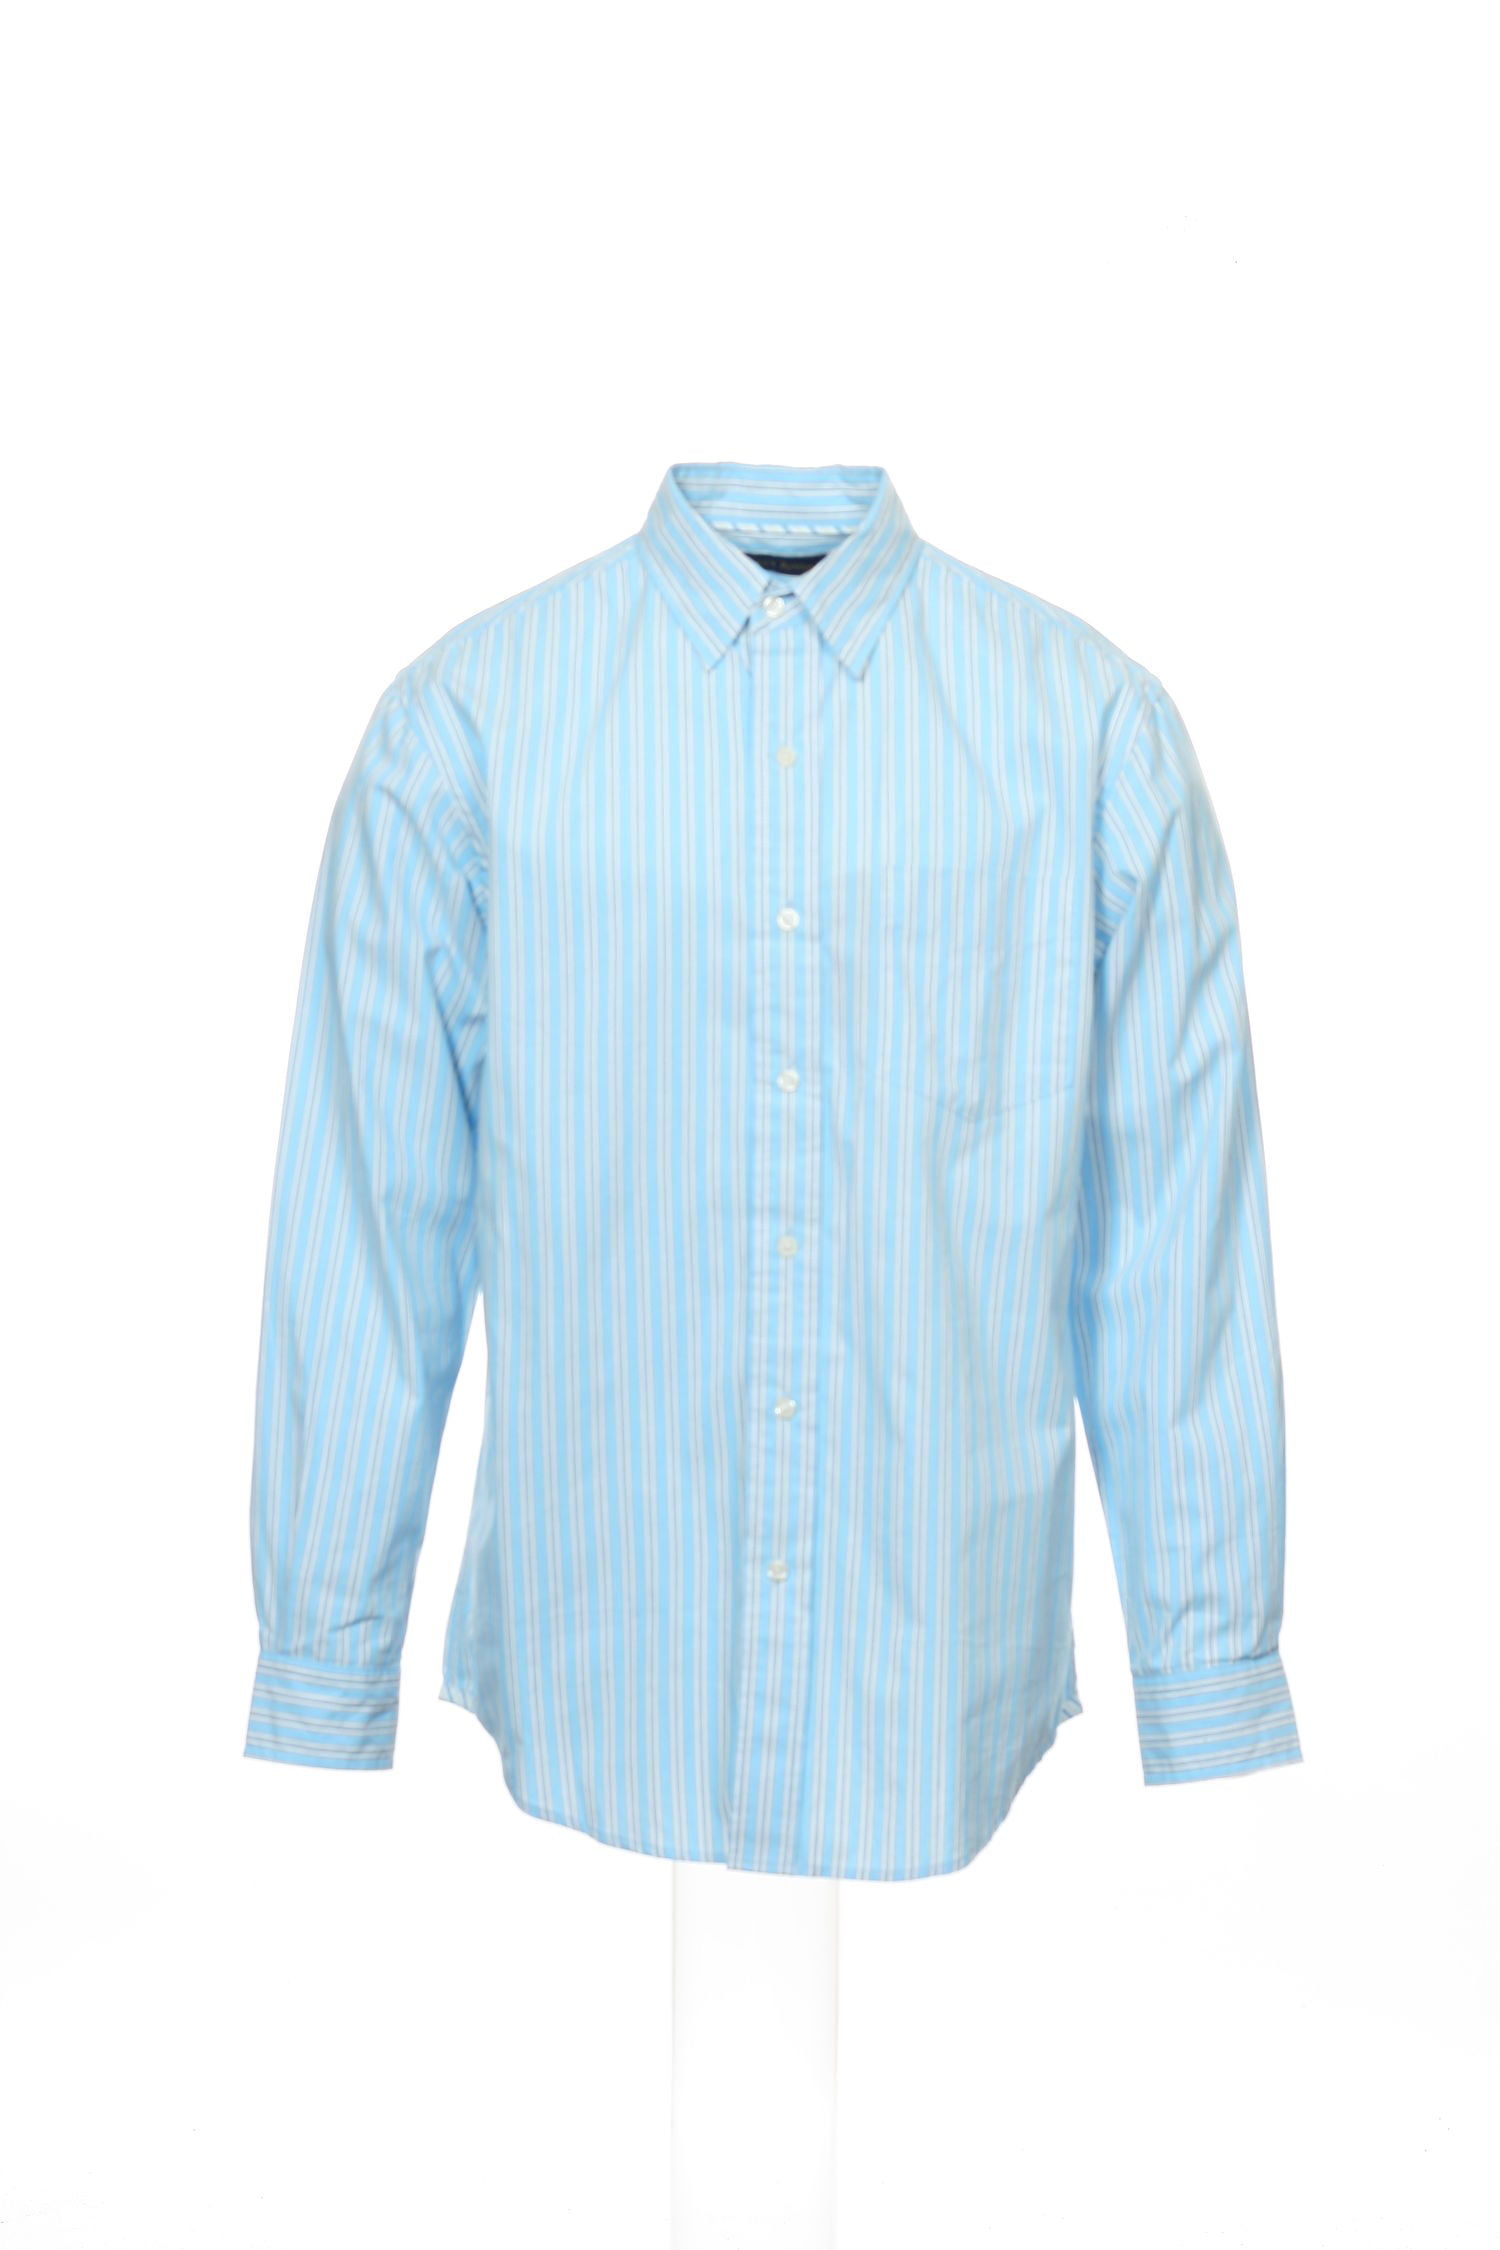 Club Room Men's Light Blue Micro Striped Button Down Shirt (Small, Carolina  Sky)